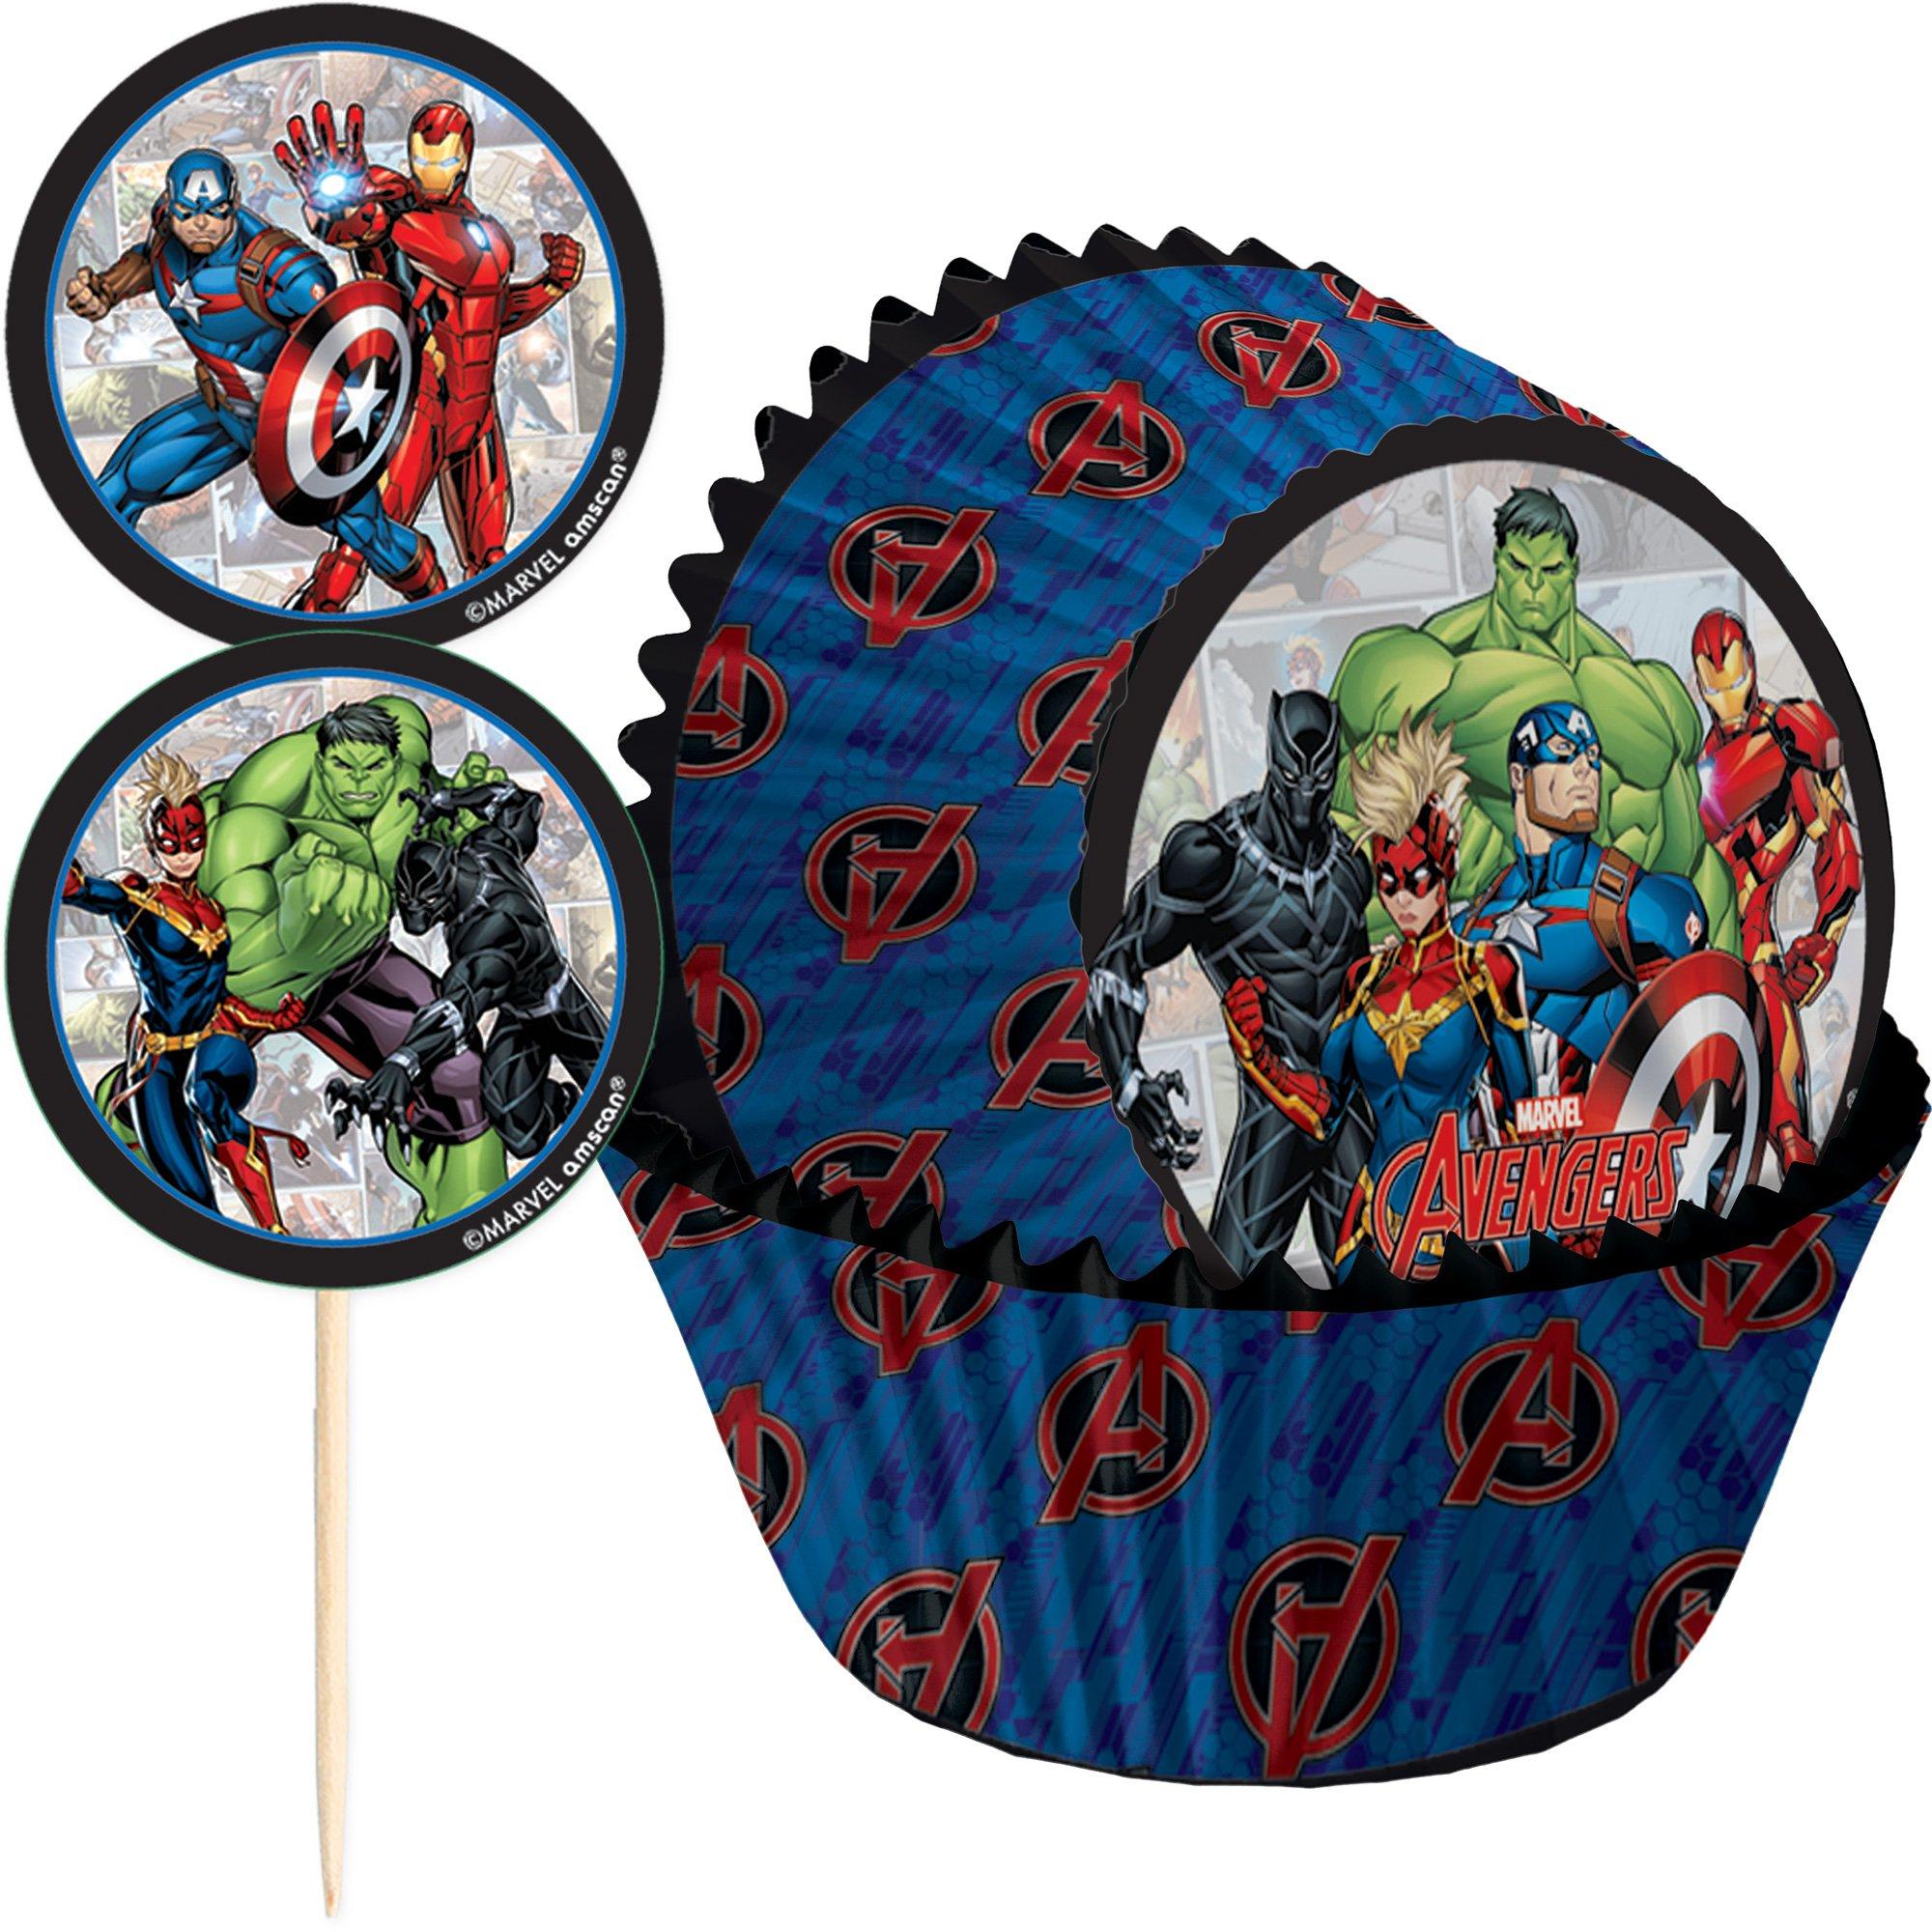 Marvel Powers Unite Cupcake Decorating Kit for 24